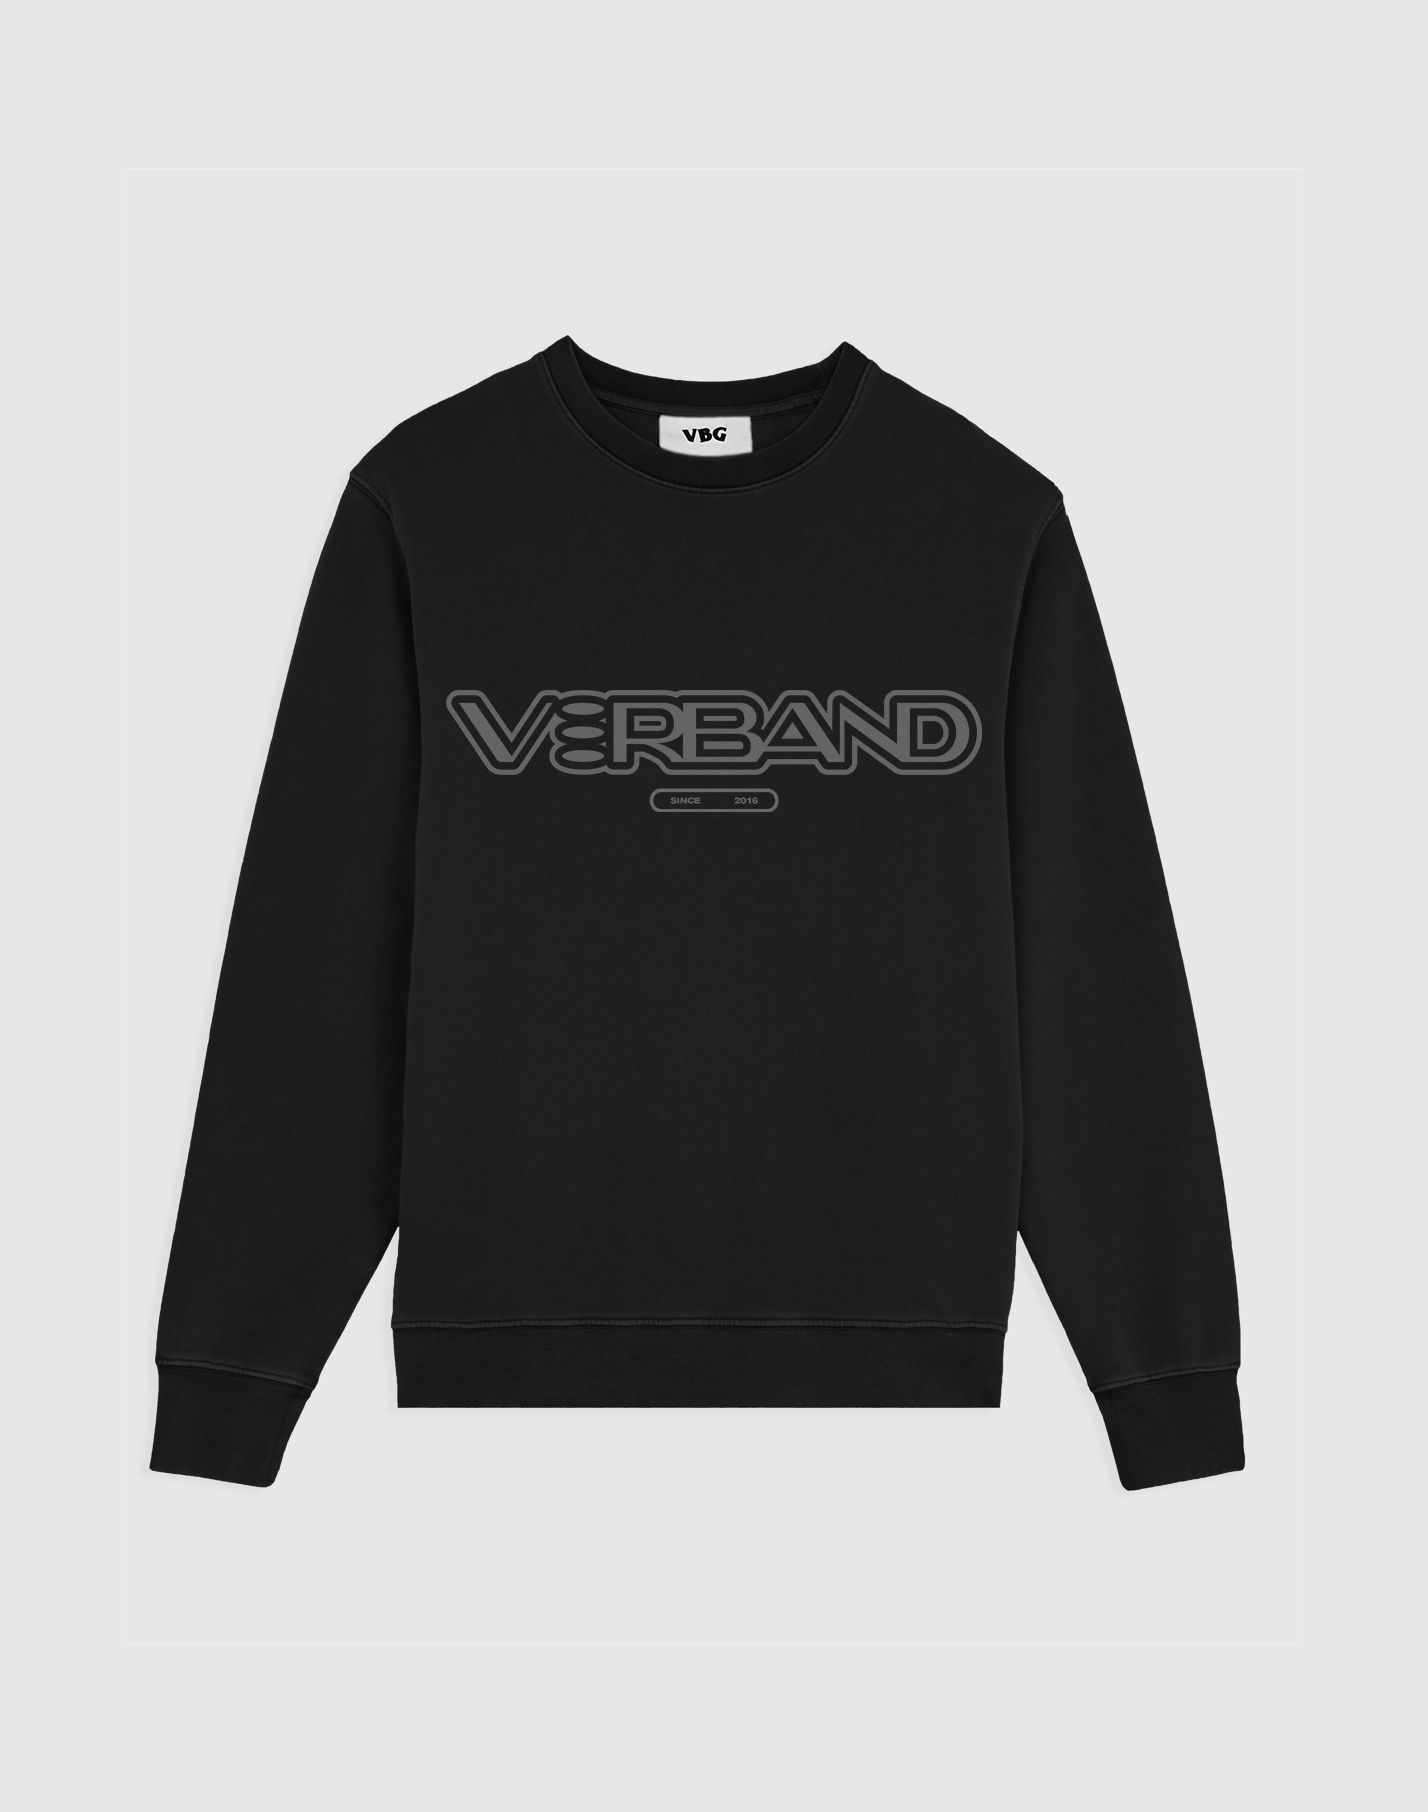 Monochrome Logo Sweater - VBG